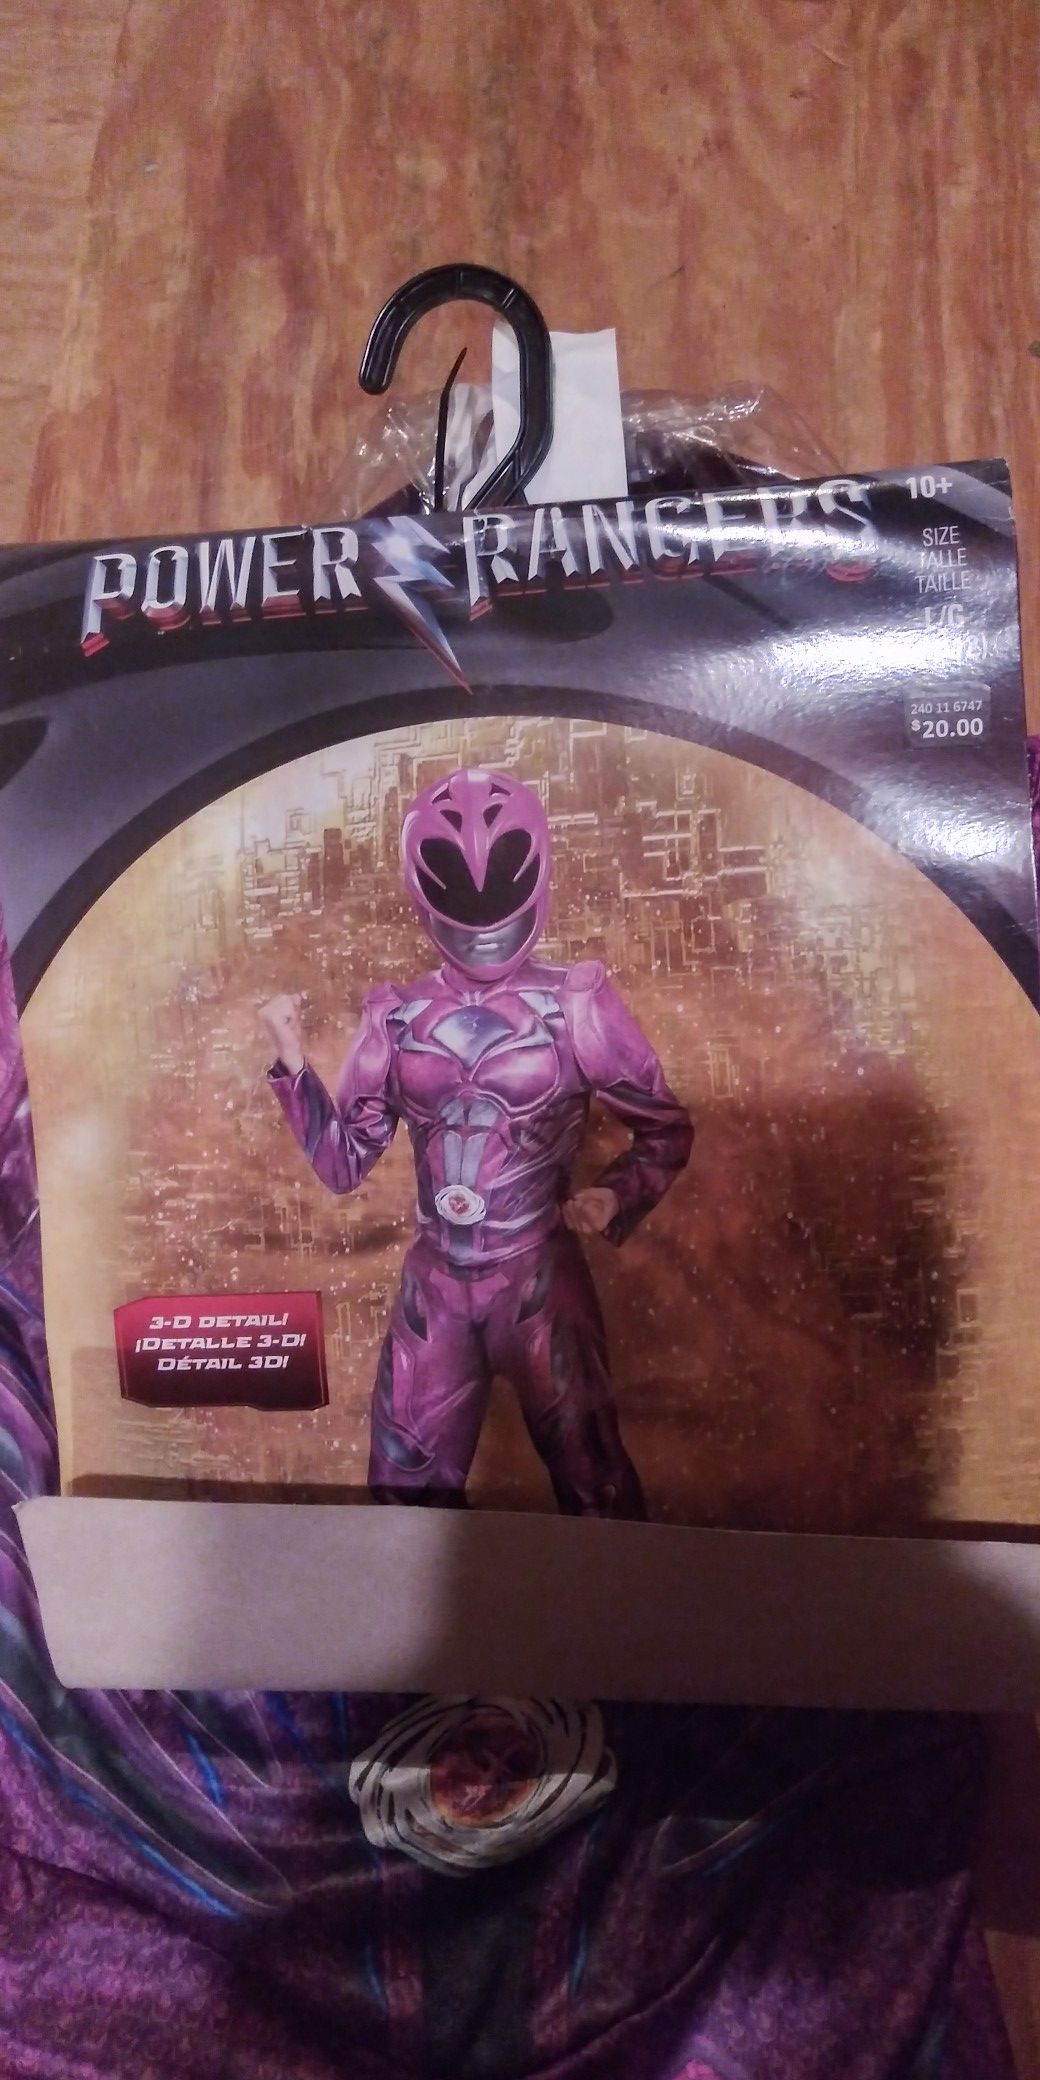 Power Rangers size (L 10/12) costume